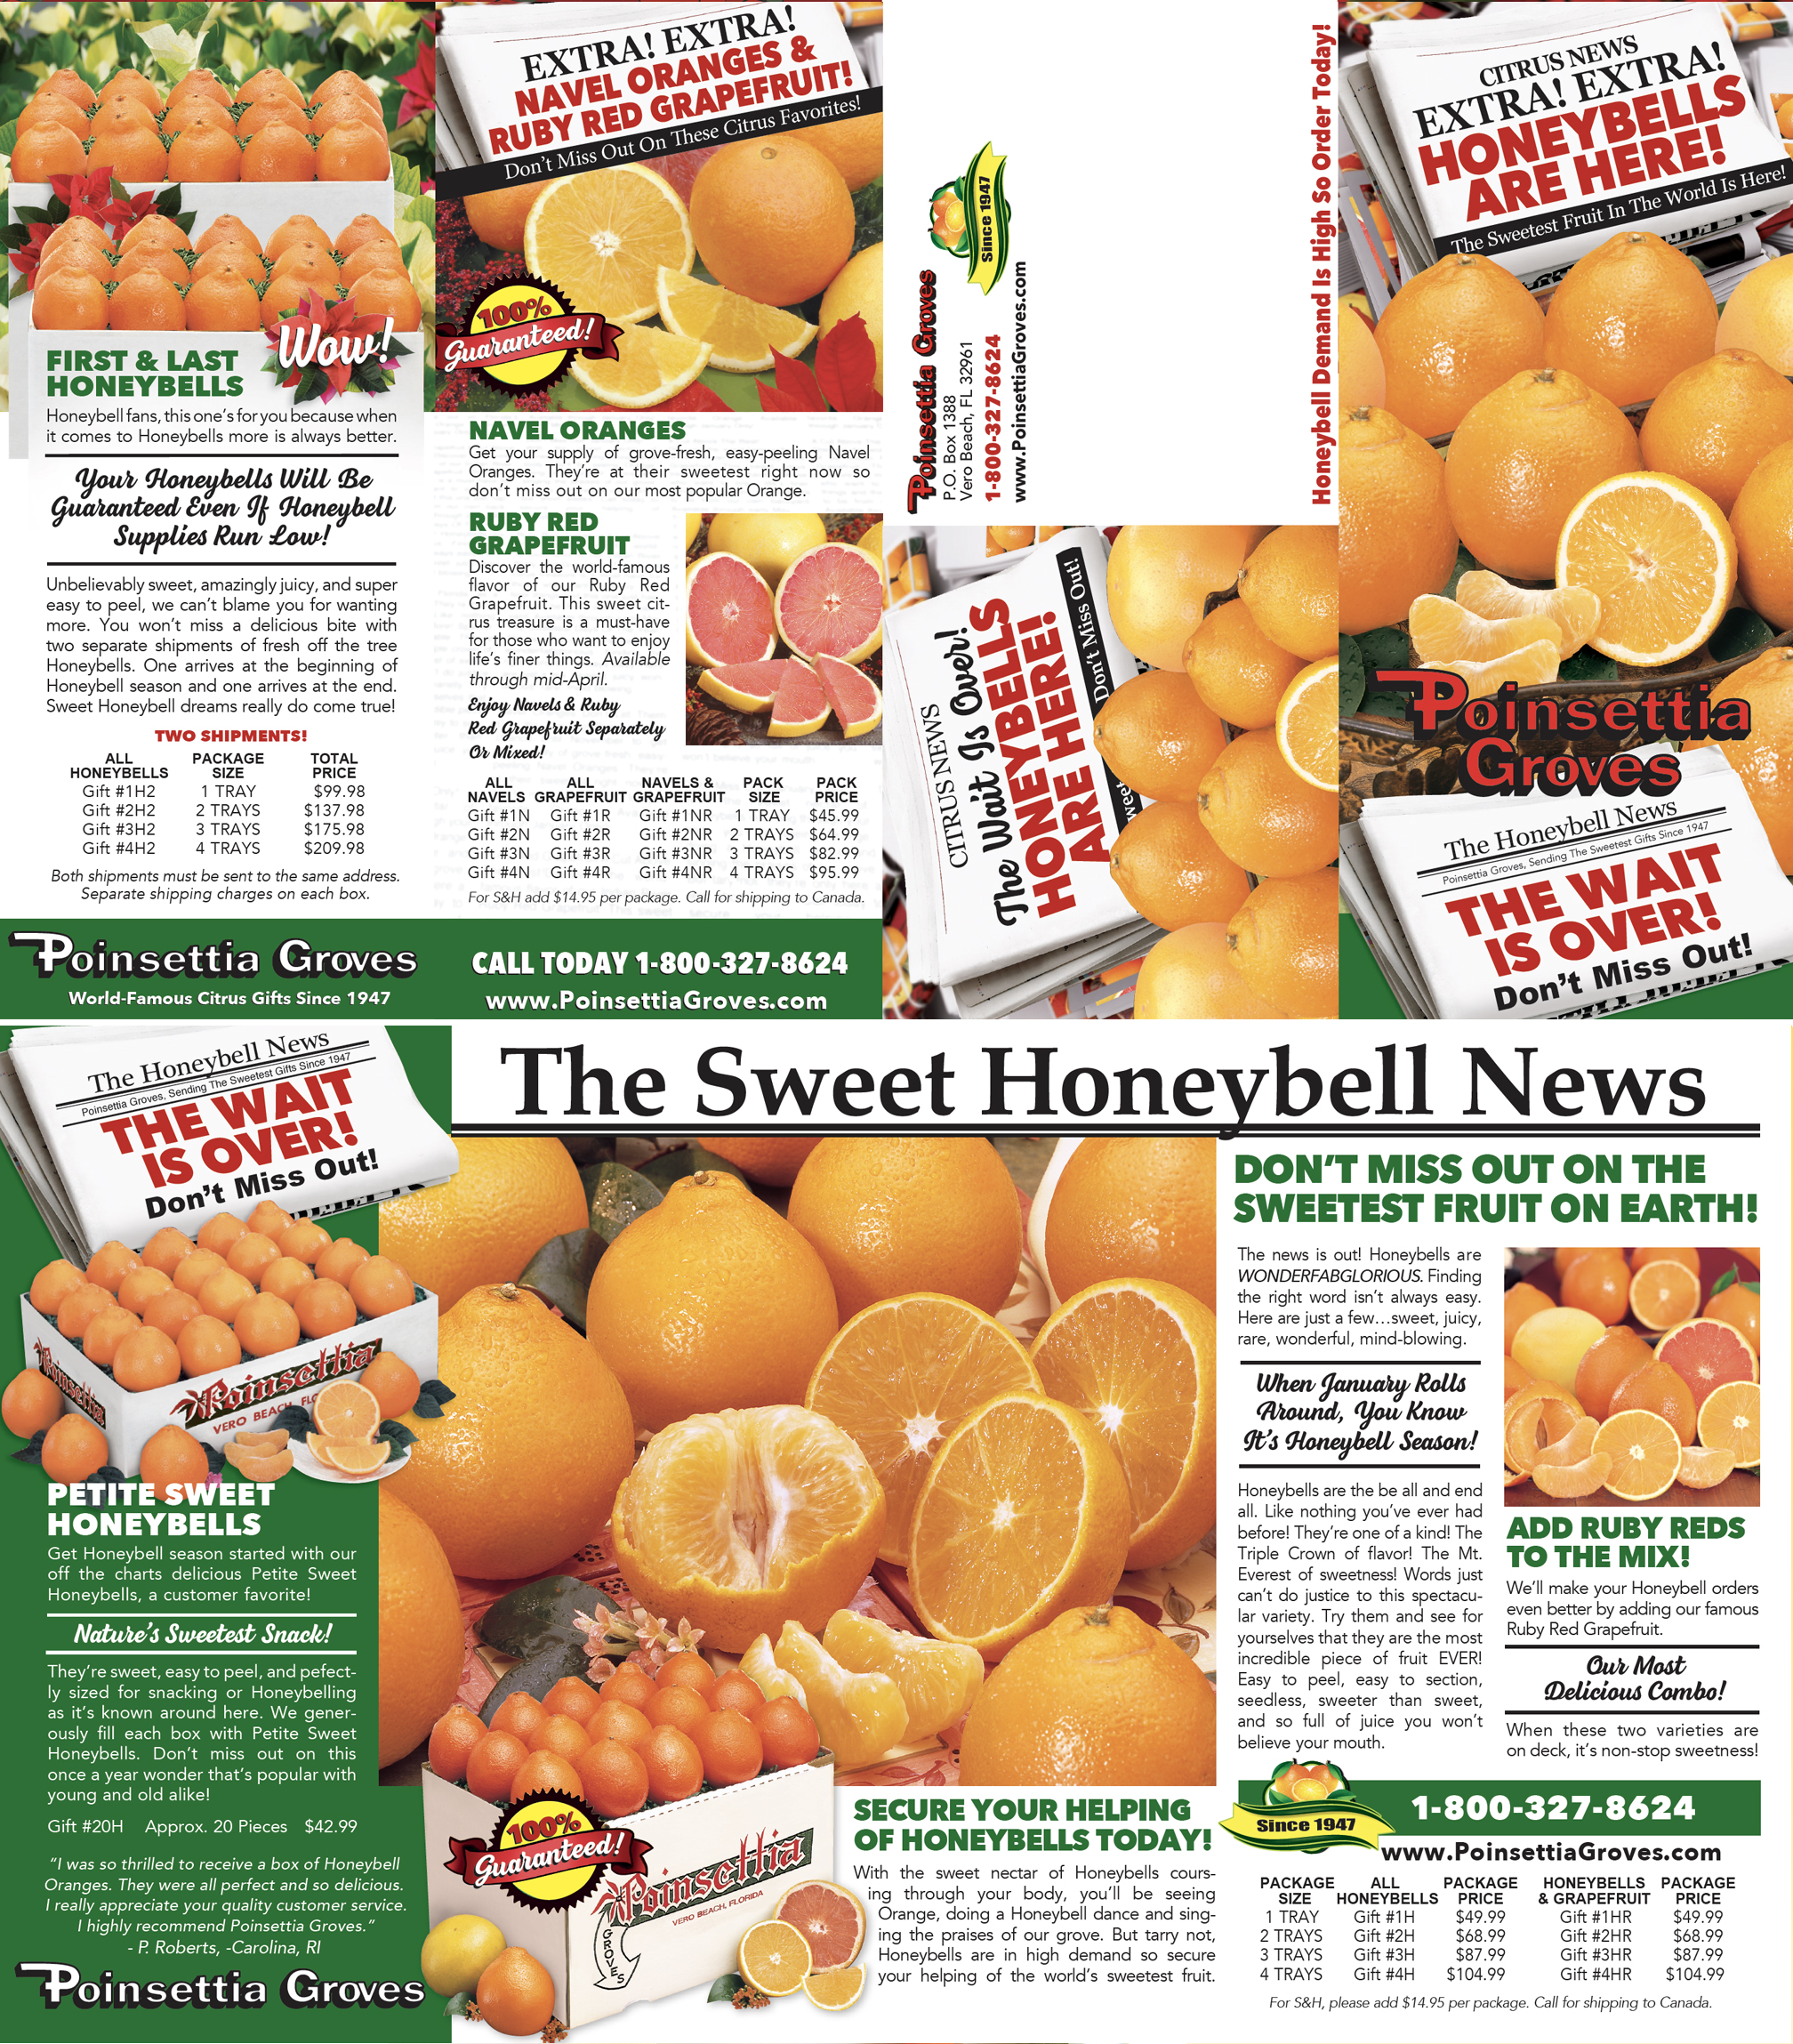 Navel Oranges and Honeybell Tangelos – Bob Roth's New River Groves